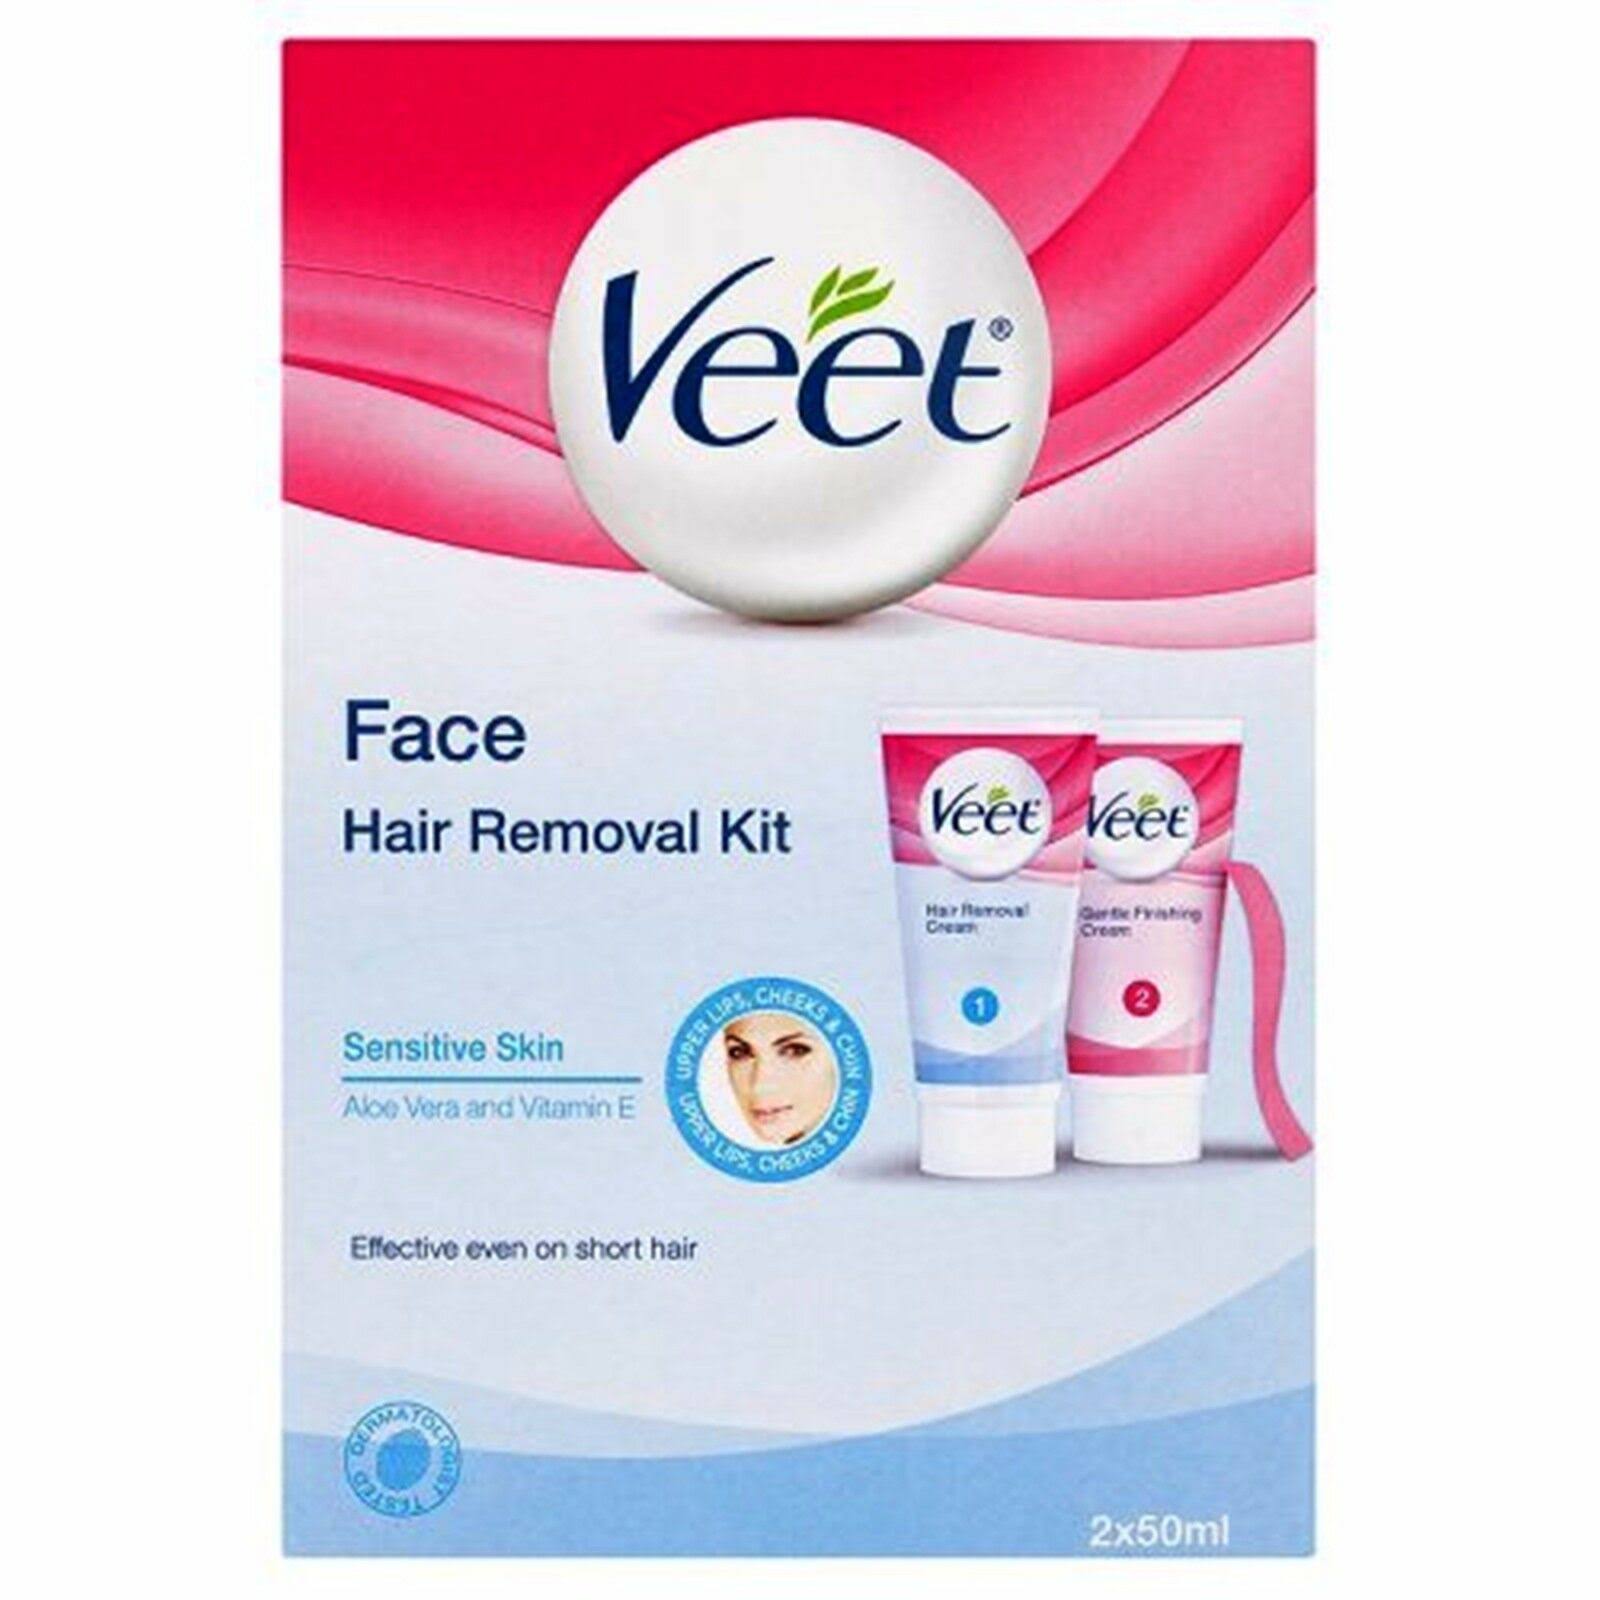 Veet Face Hair Removal Kit - Sensitive Skin, 2 x 50ml